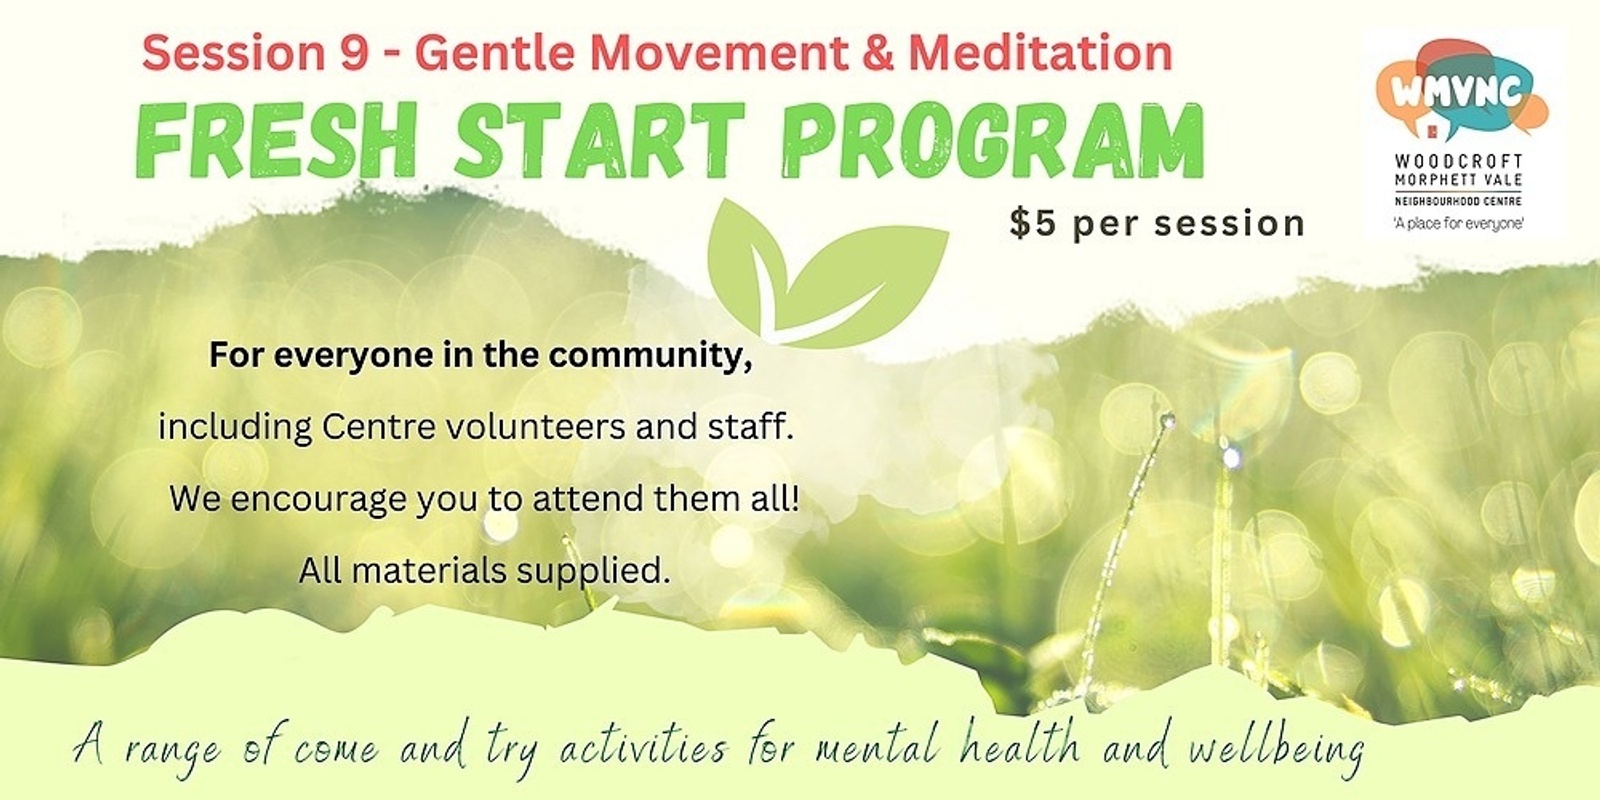 Fresh Start - Session 9 - Gentle Movement & Meditation